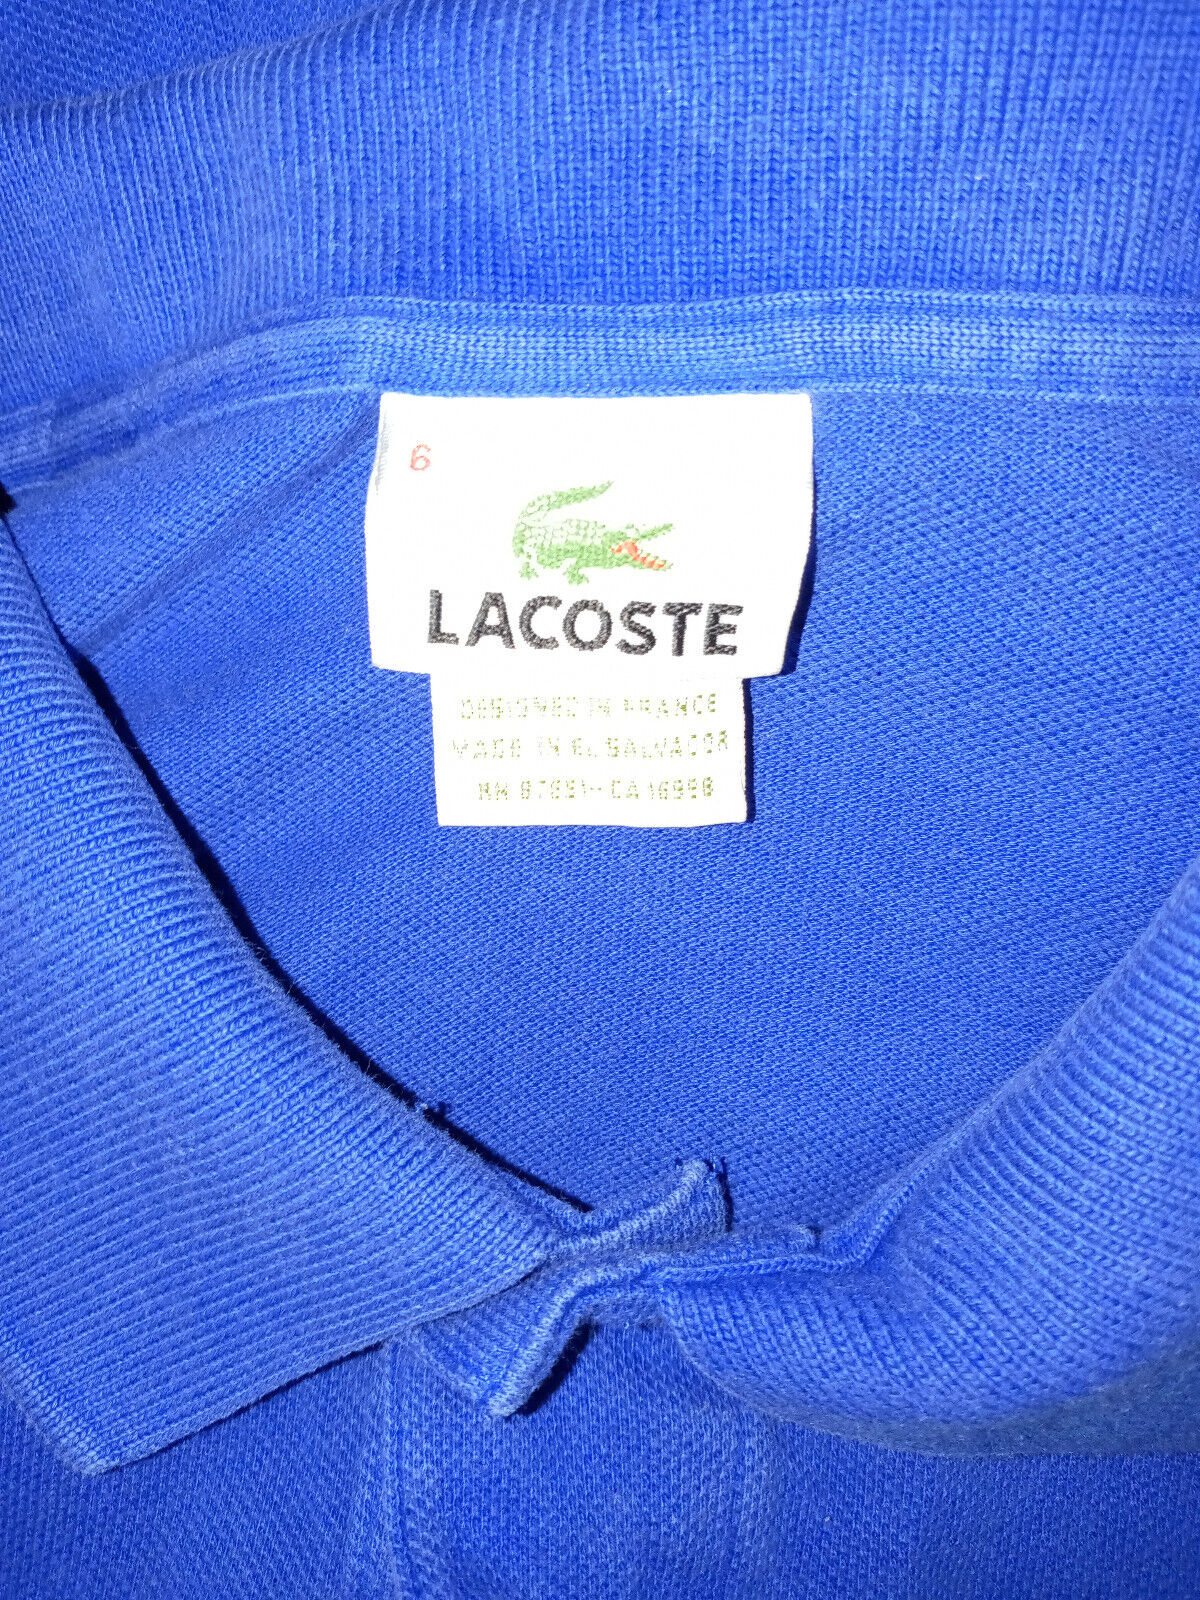 Lacoste - Polo Shirt - Size: 6 - image 3